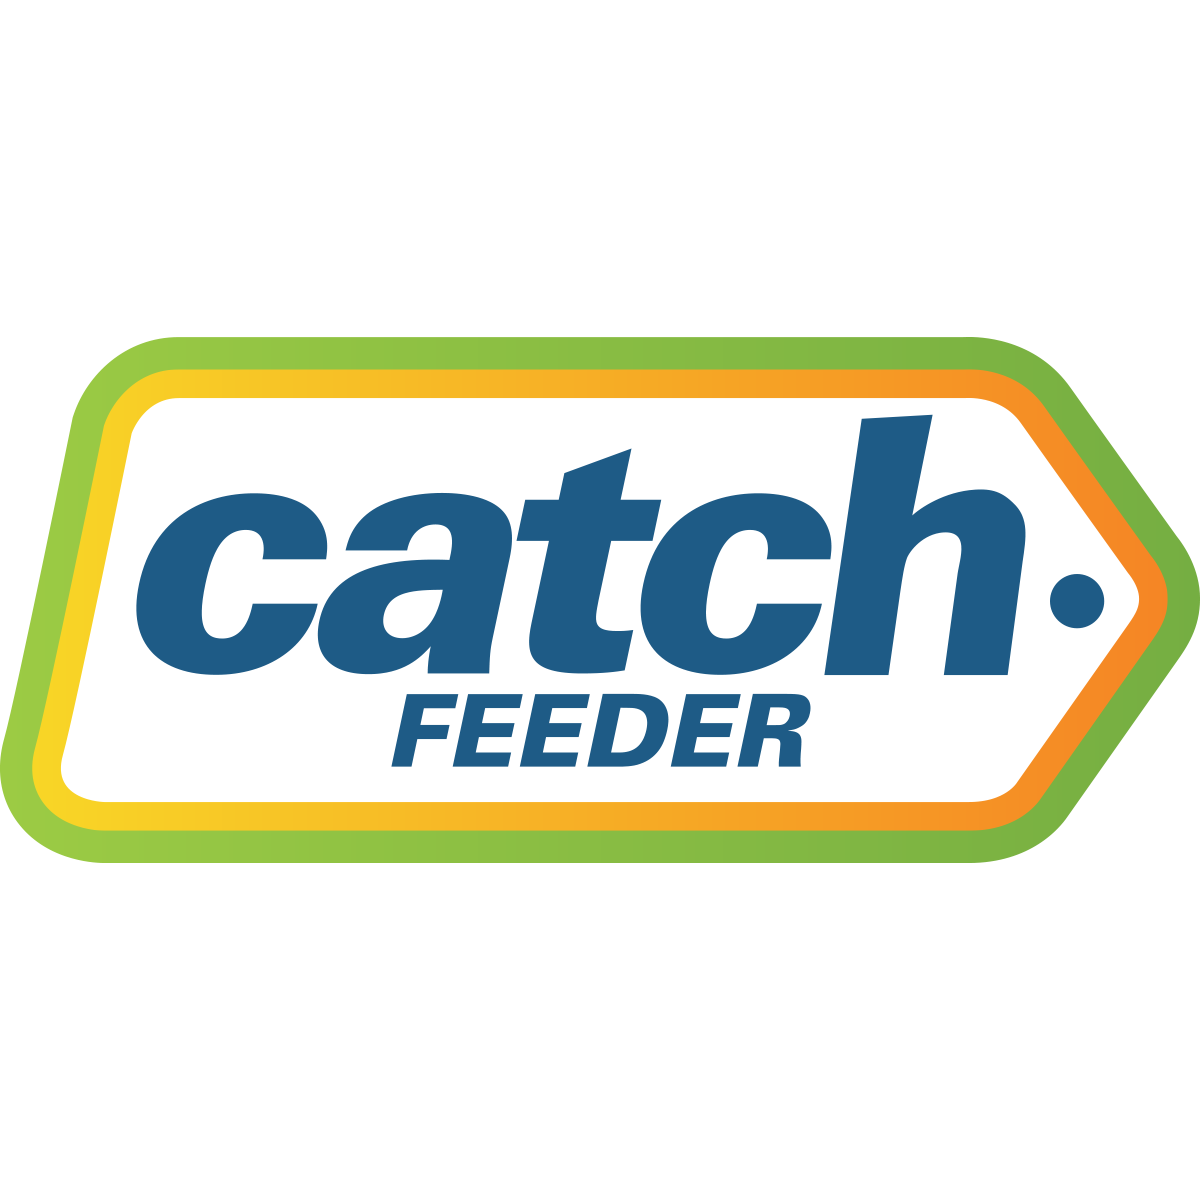 CatchFeeder Shopify App